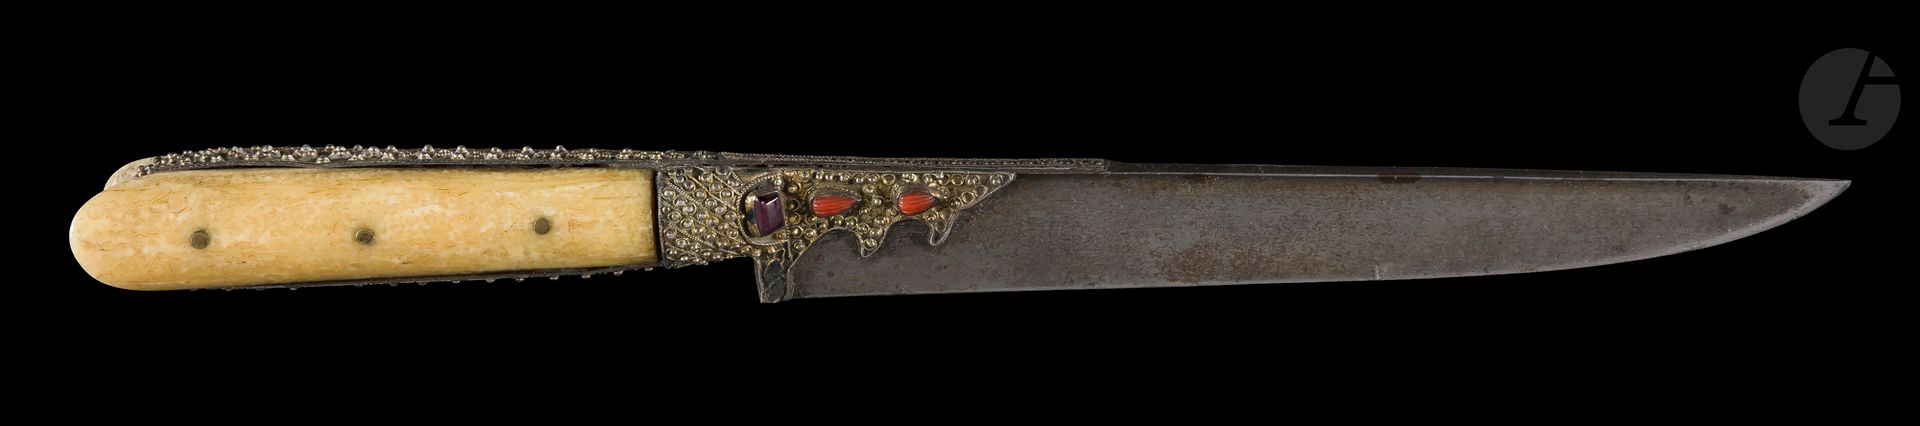 Null Kard dagger, Ottoman Balkans, 19th century
Single-edged straight blade with&hellip;